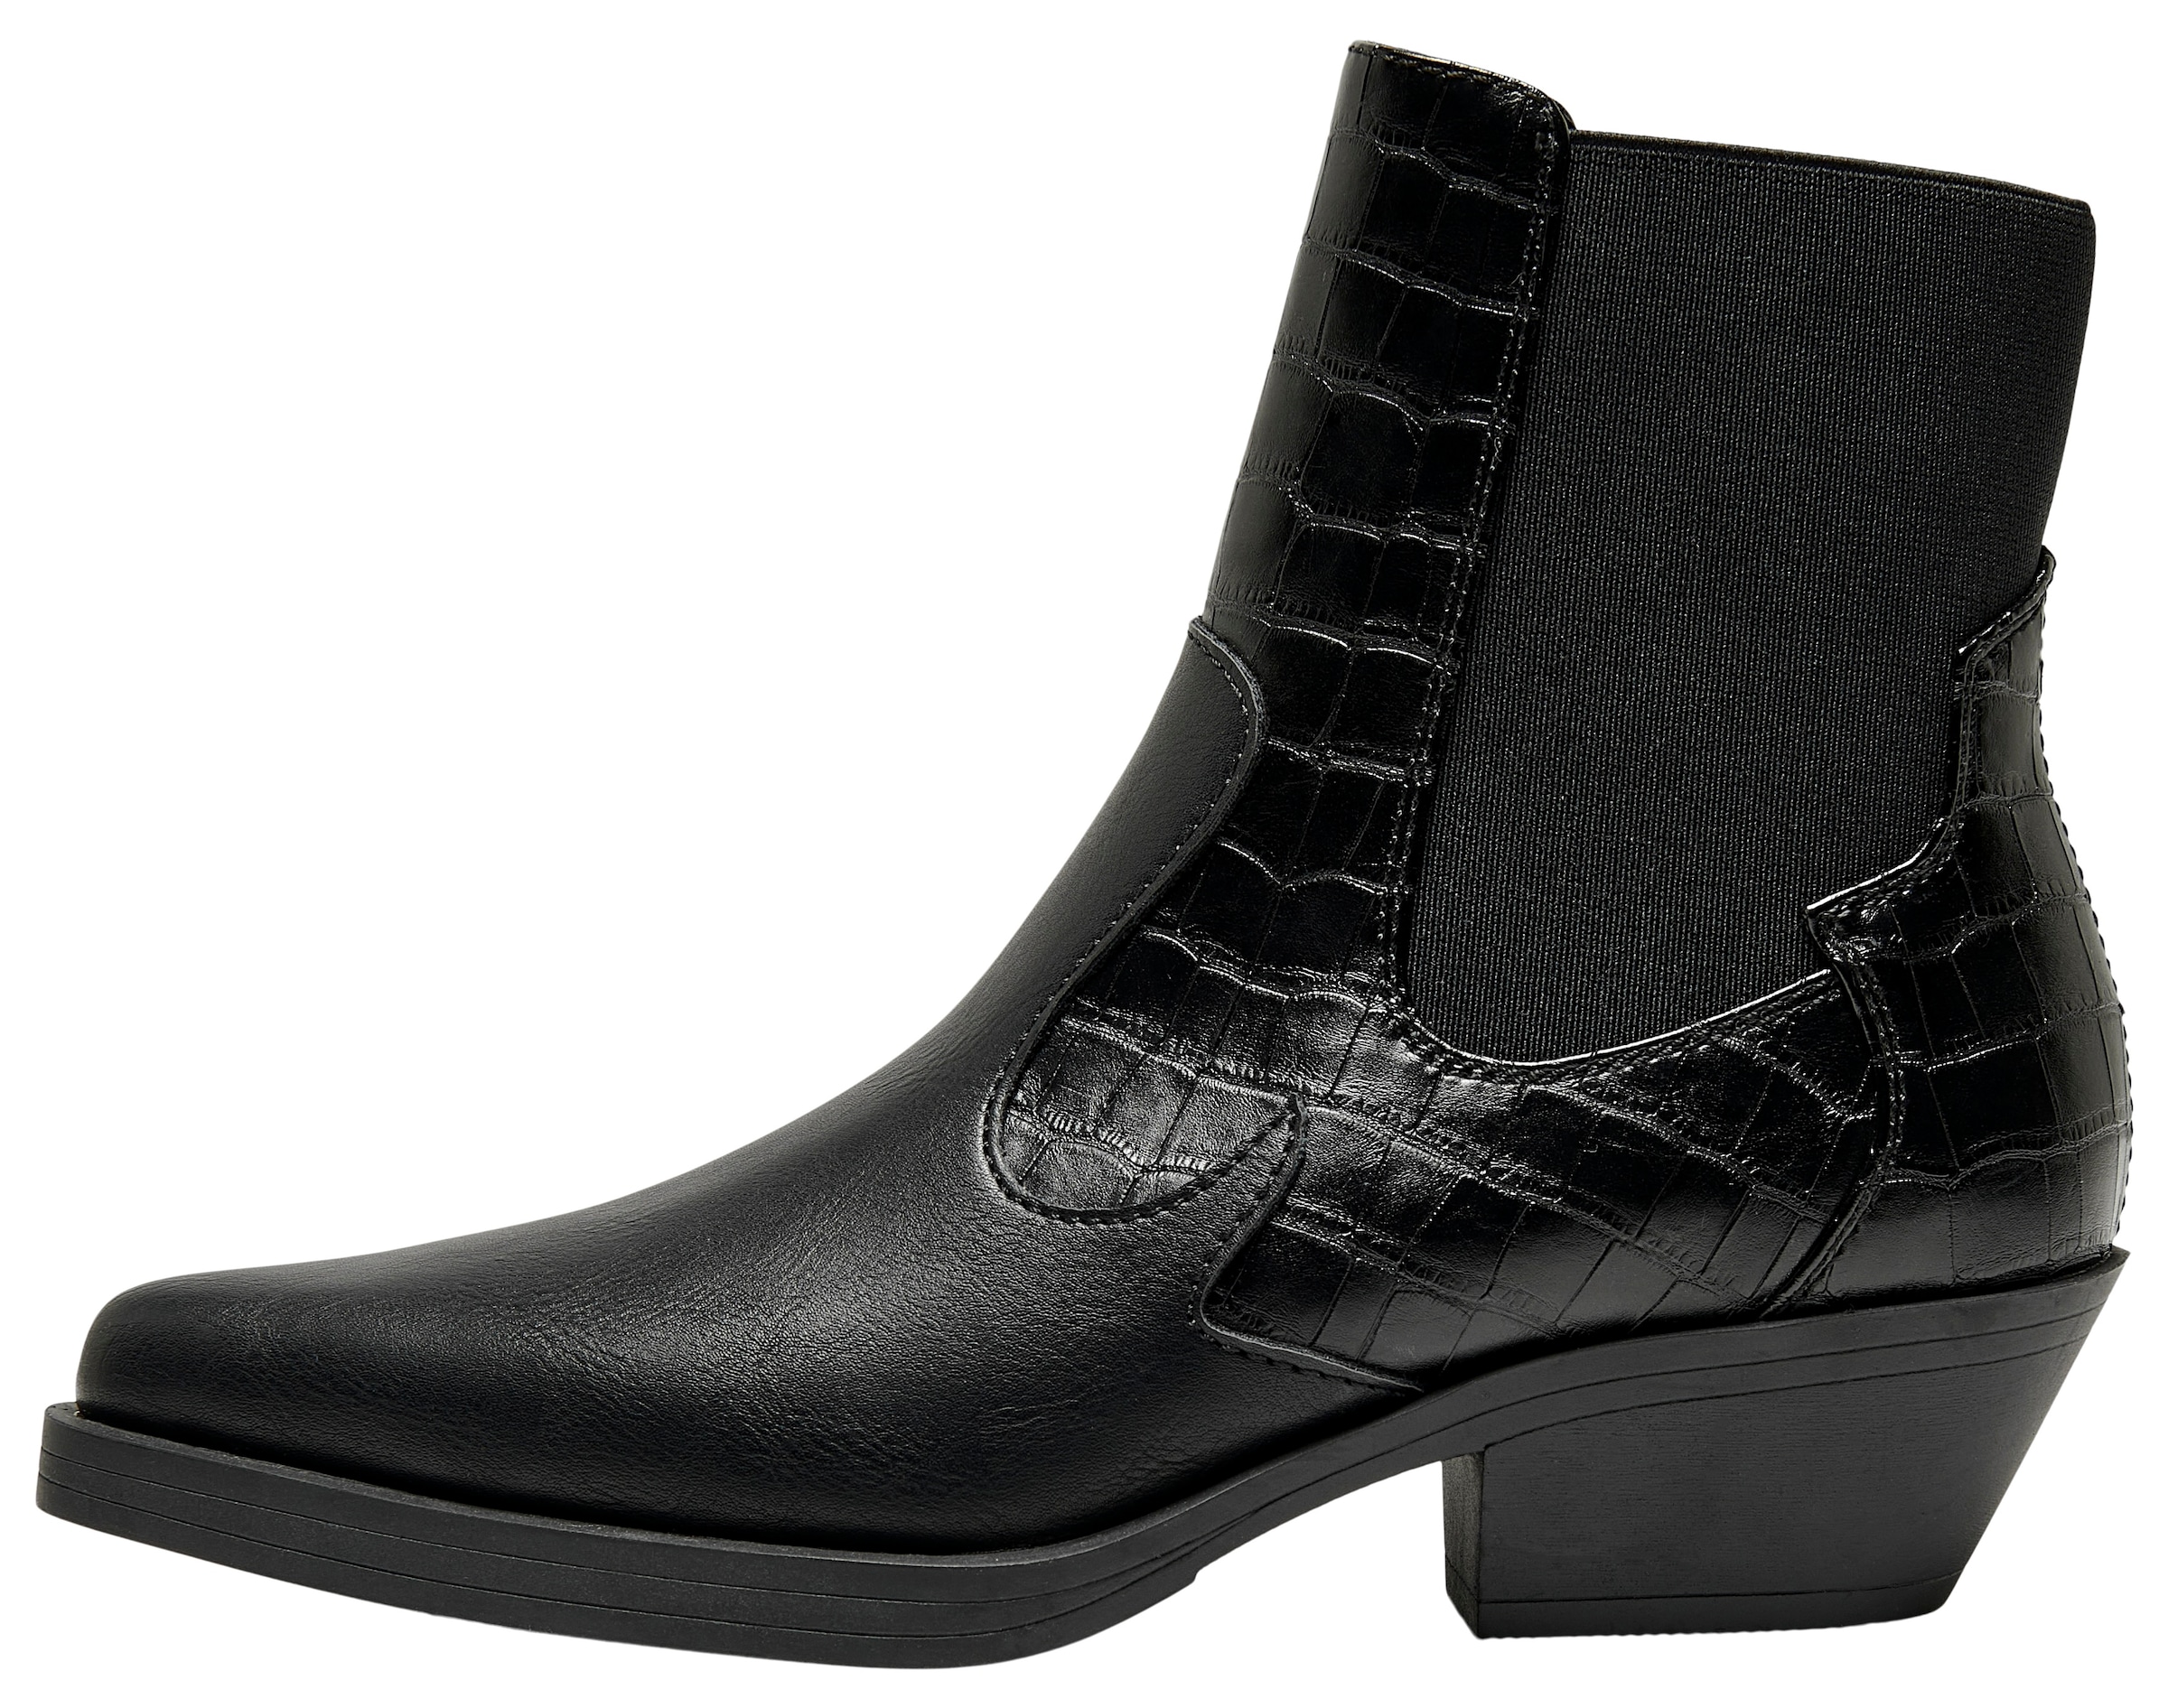 ONLY Shoes Westernstiefelette »ONLBRONCO-2«, Cowboy Stiefelette, Boots in spitz zulaufender Form